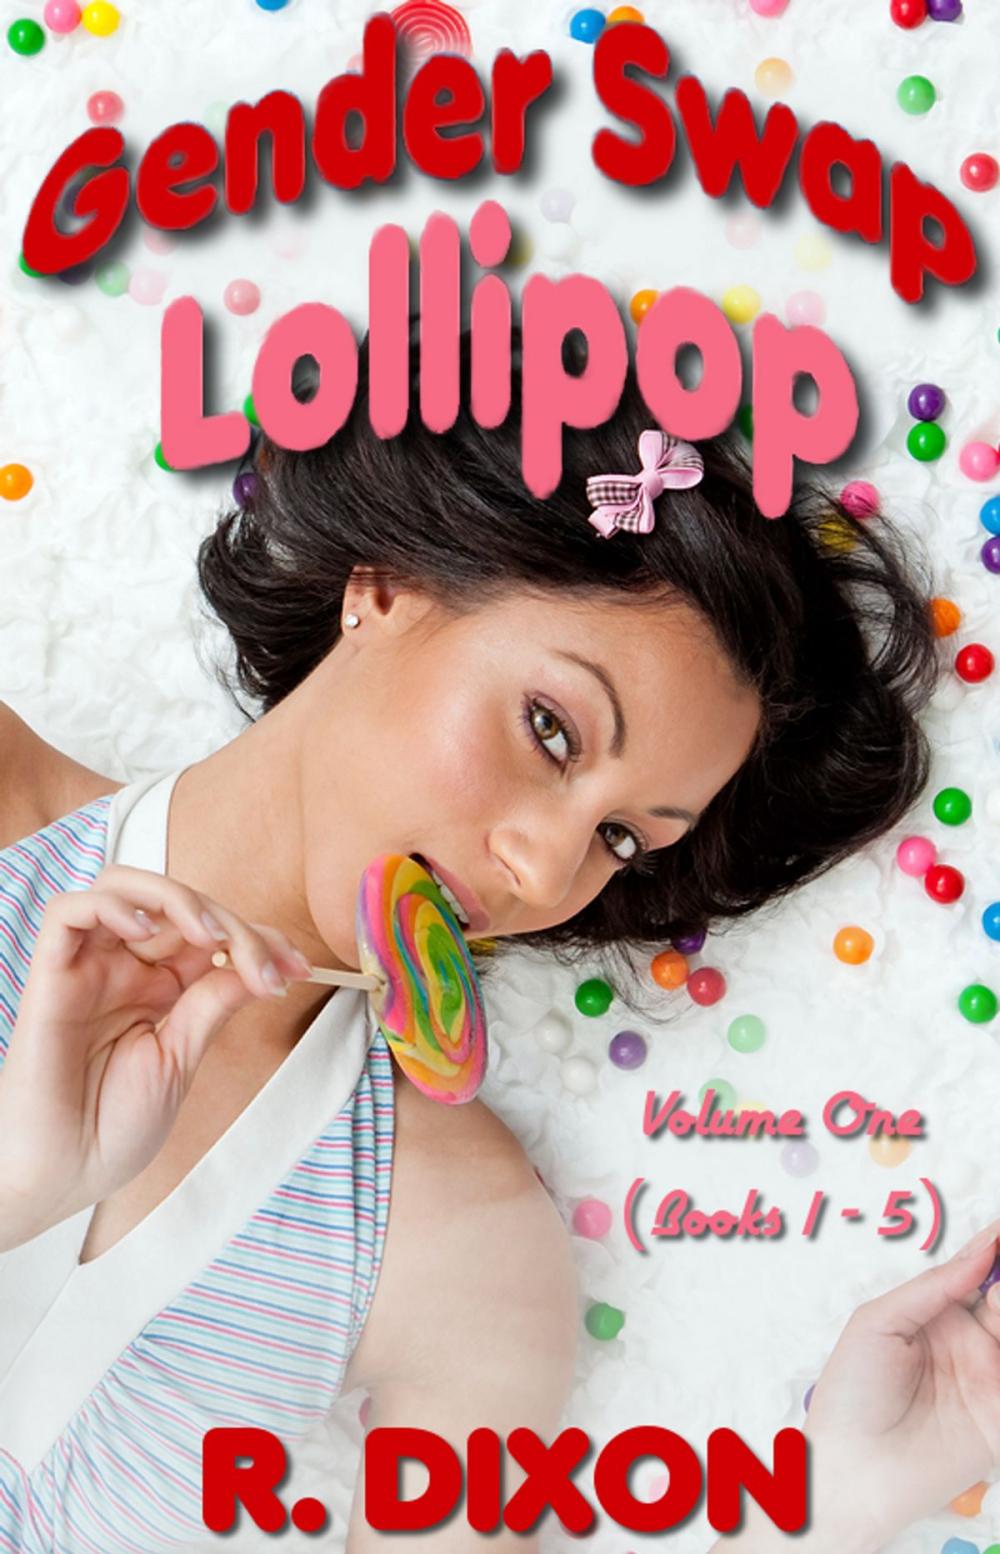 Big bigCover of Gender Swap Lollipop - Volume One (Books 1-5)